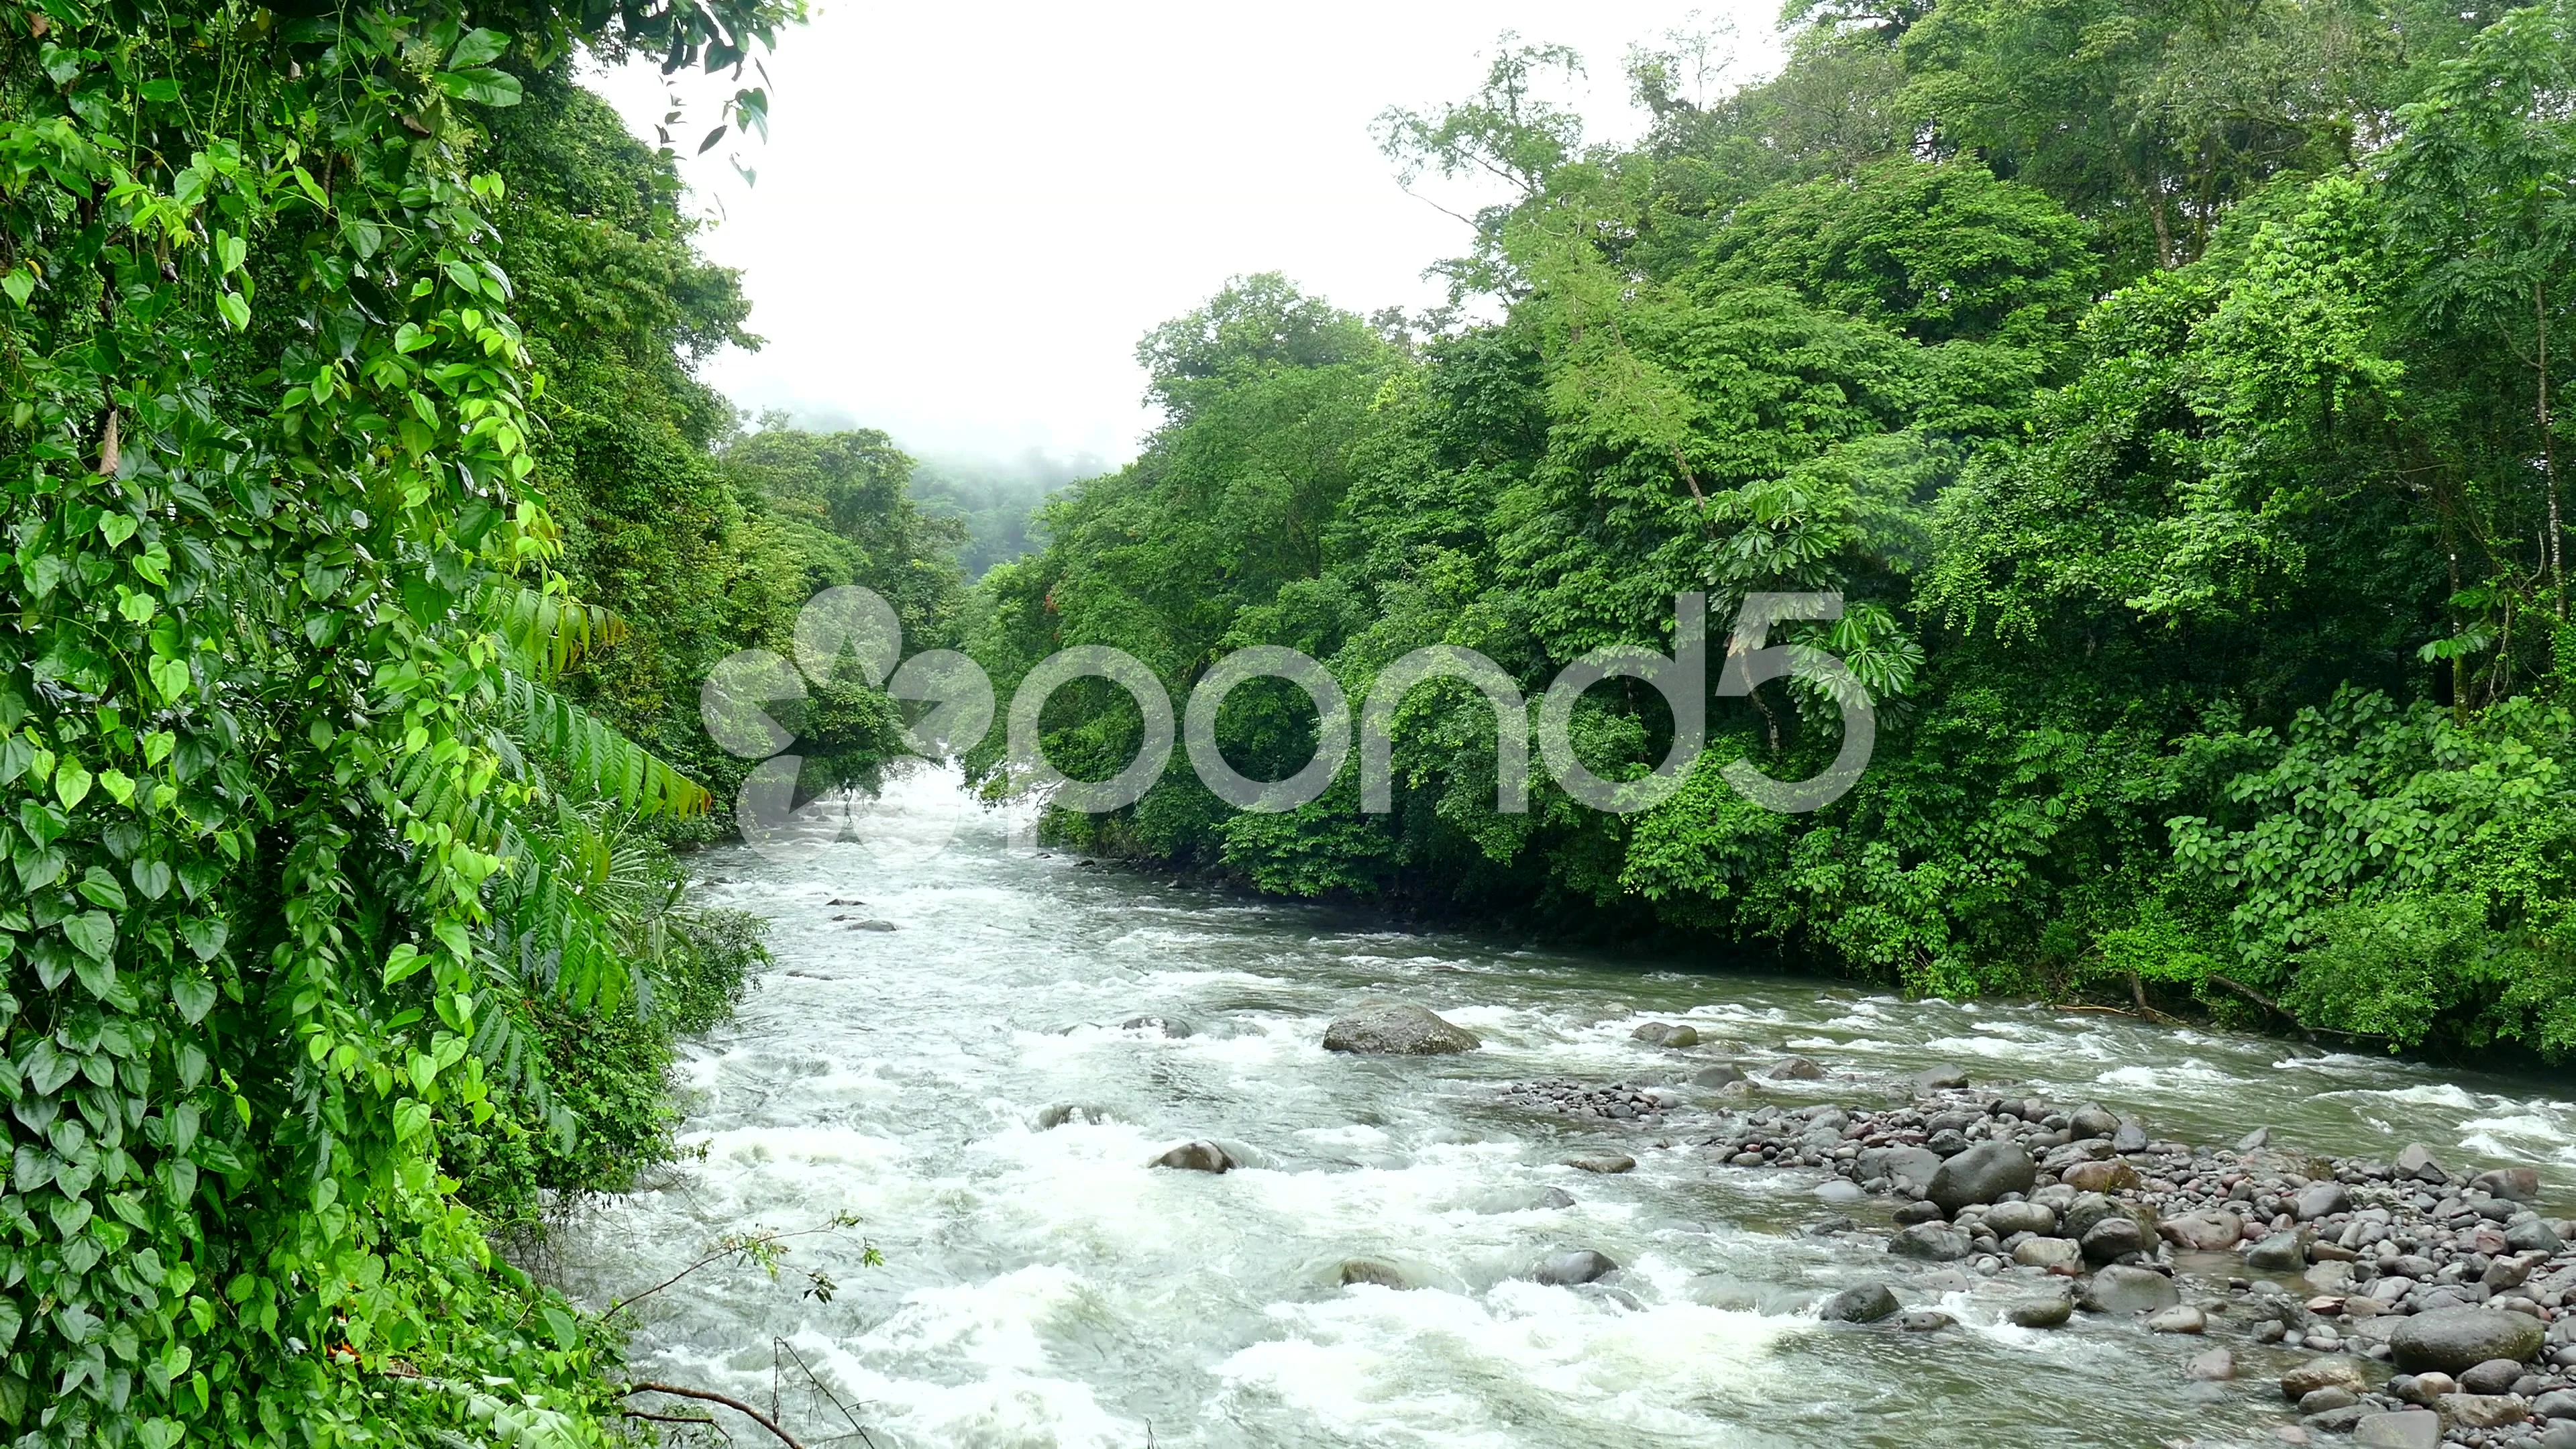 https://images.pond5.com/rapids-river-rain-nature-jungle-footage-053893014_prevstill.jpeg